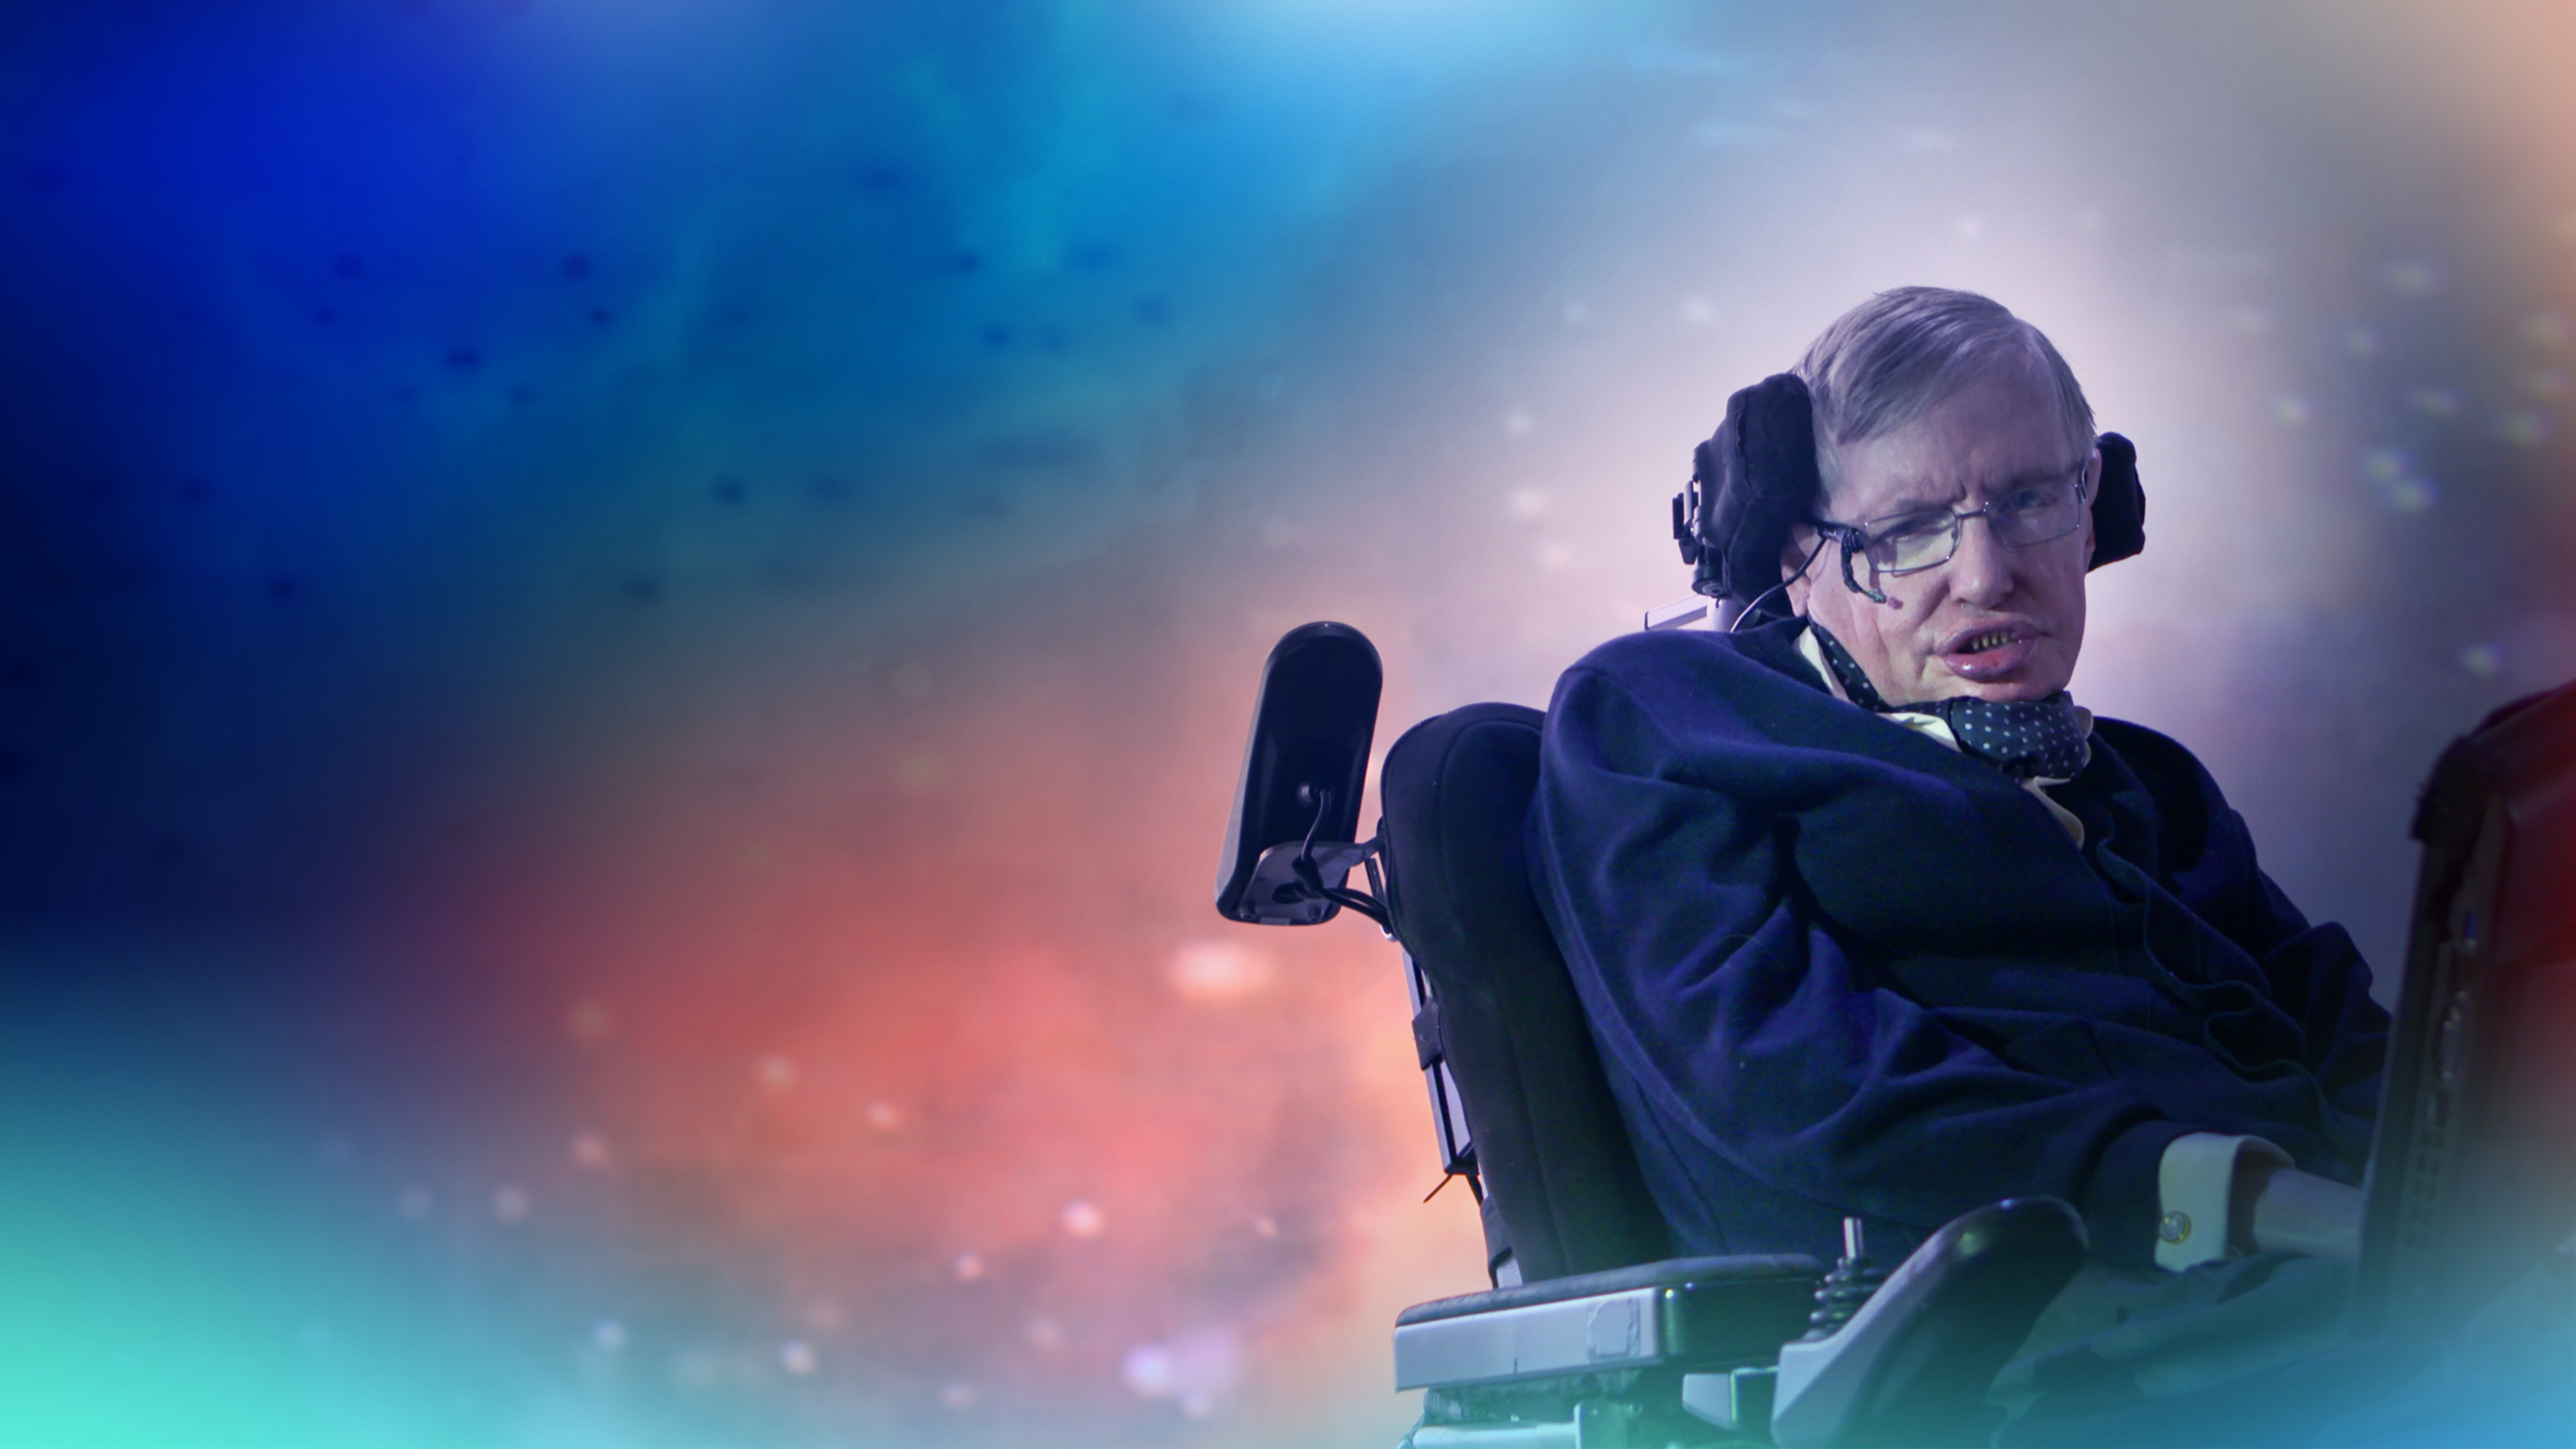 Geniul, cu Stephen Hawking